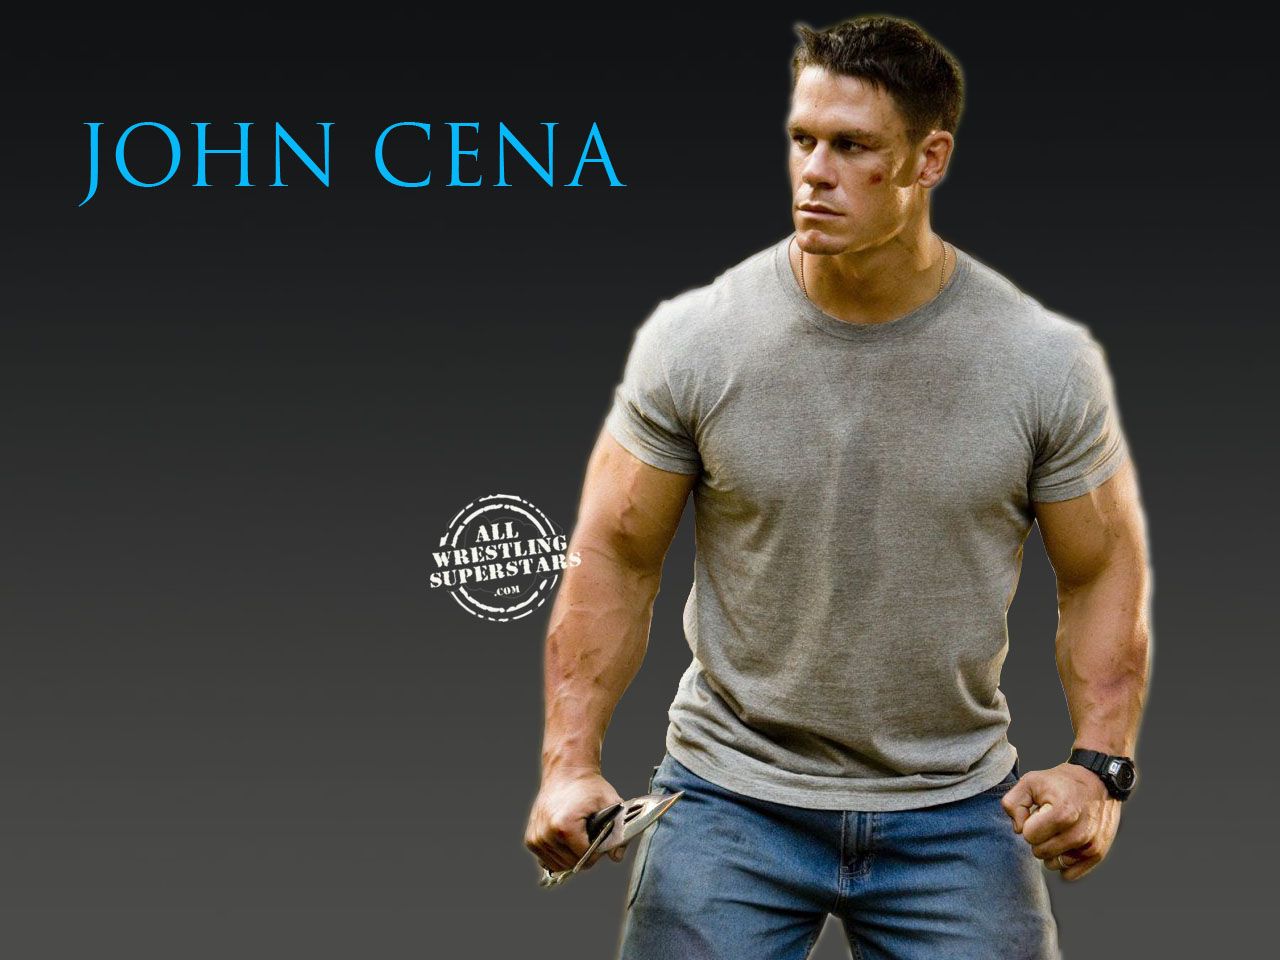 Free Download John Cena 2012 Wallpaper HQ 480P | free download ...